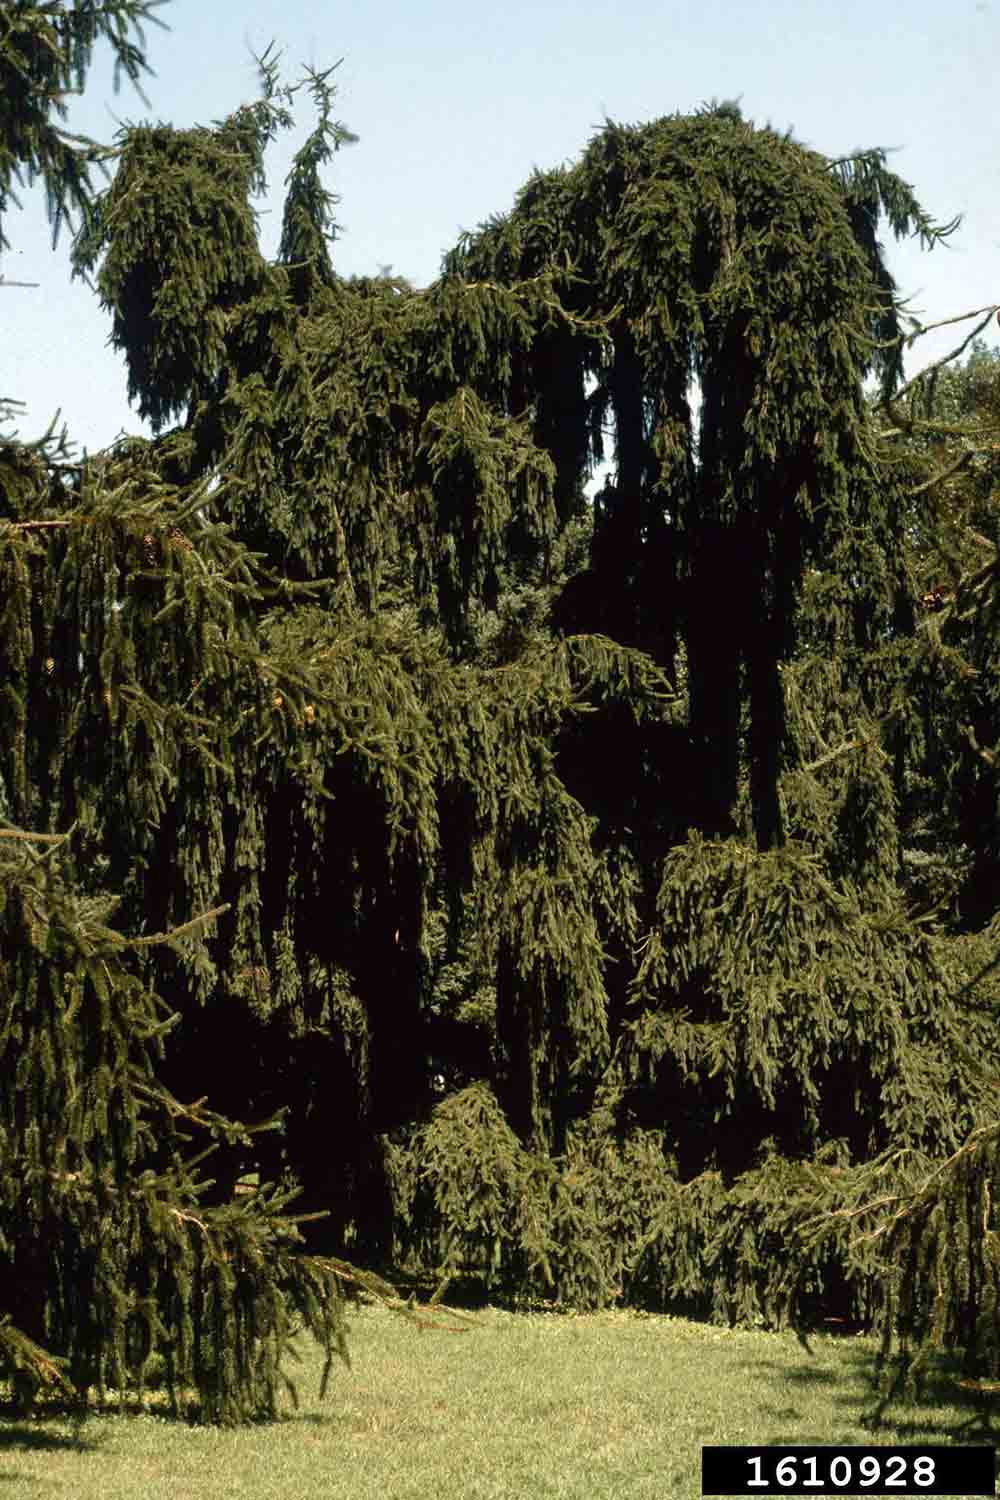 Norway spruce cultivar